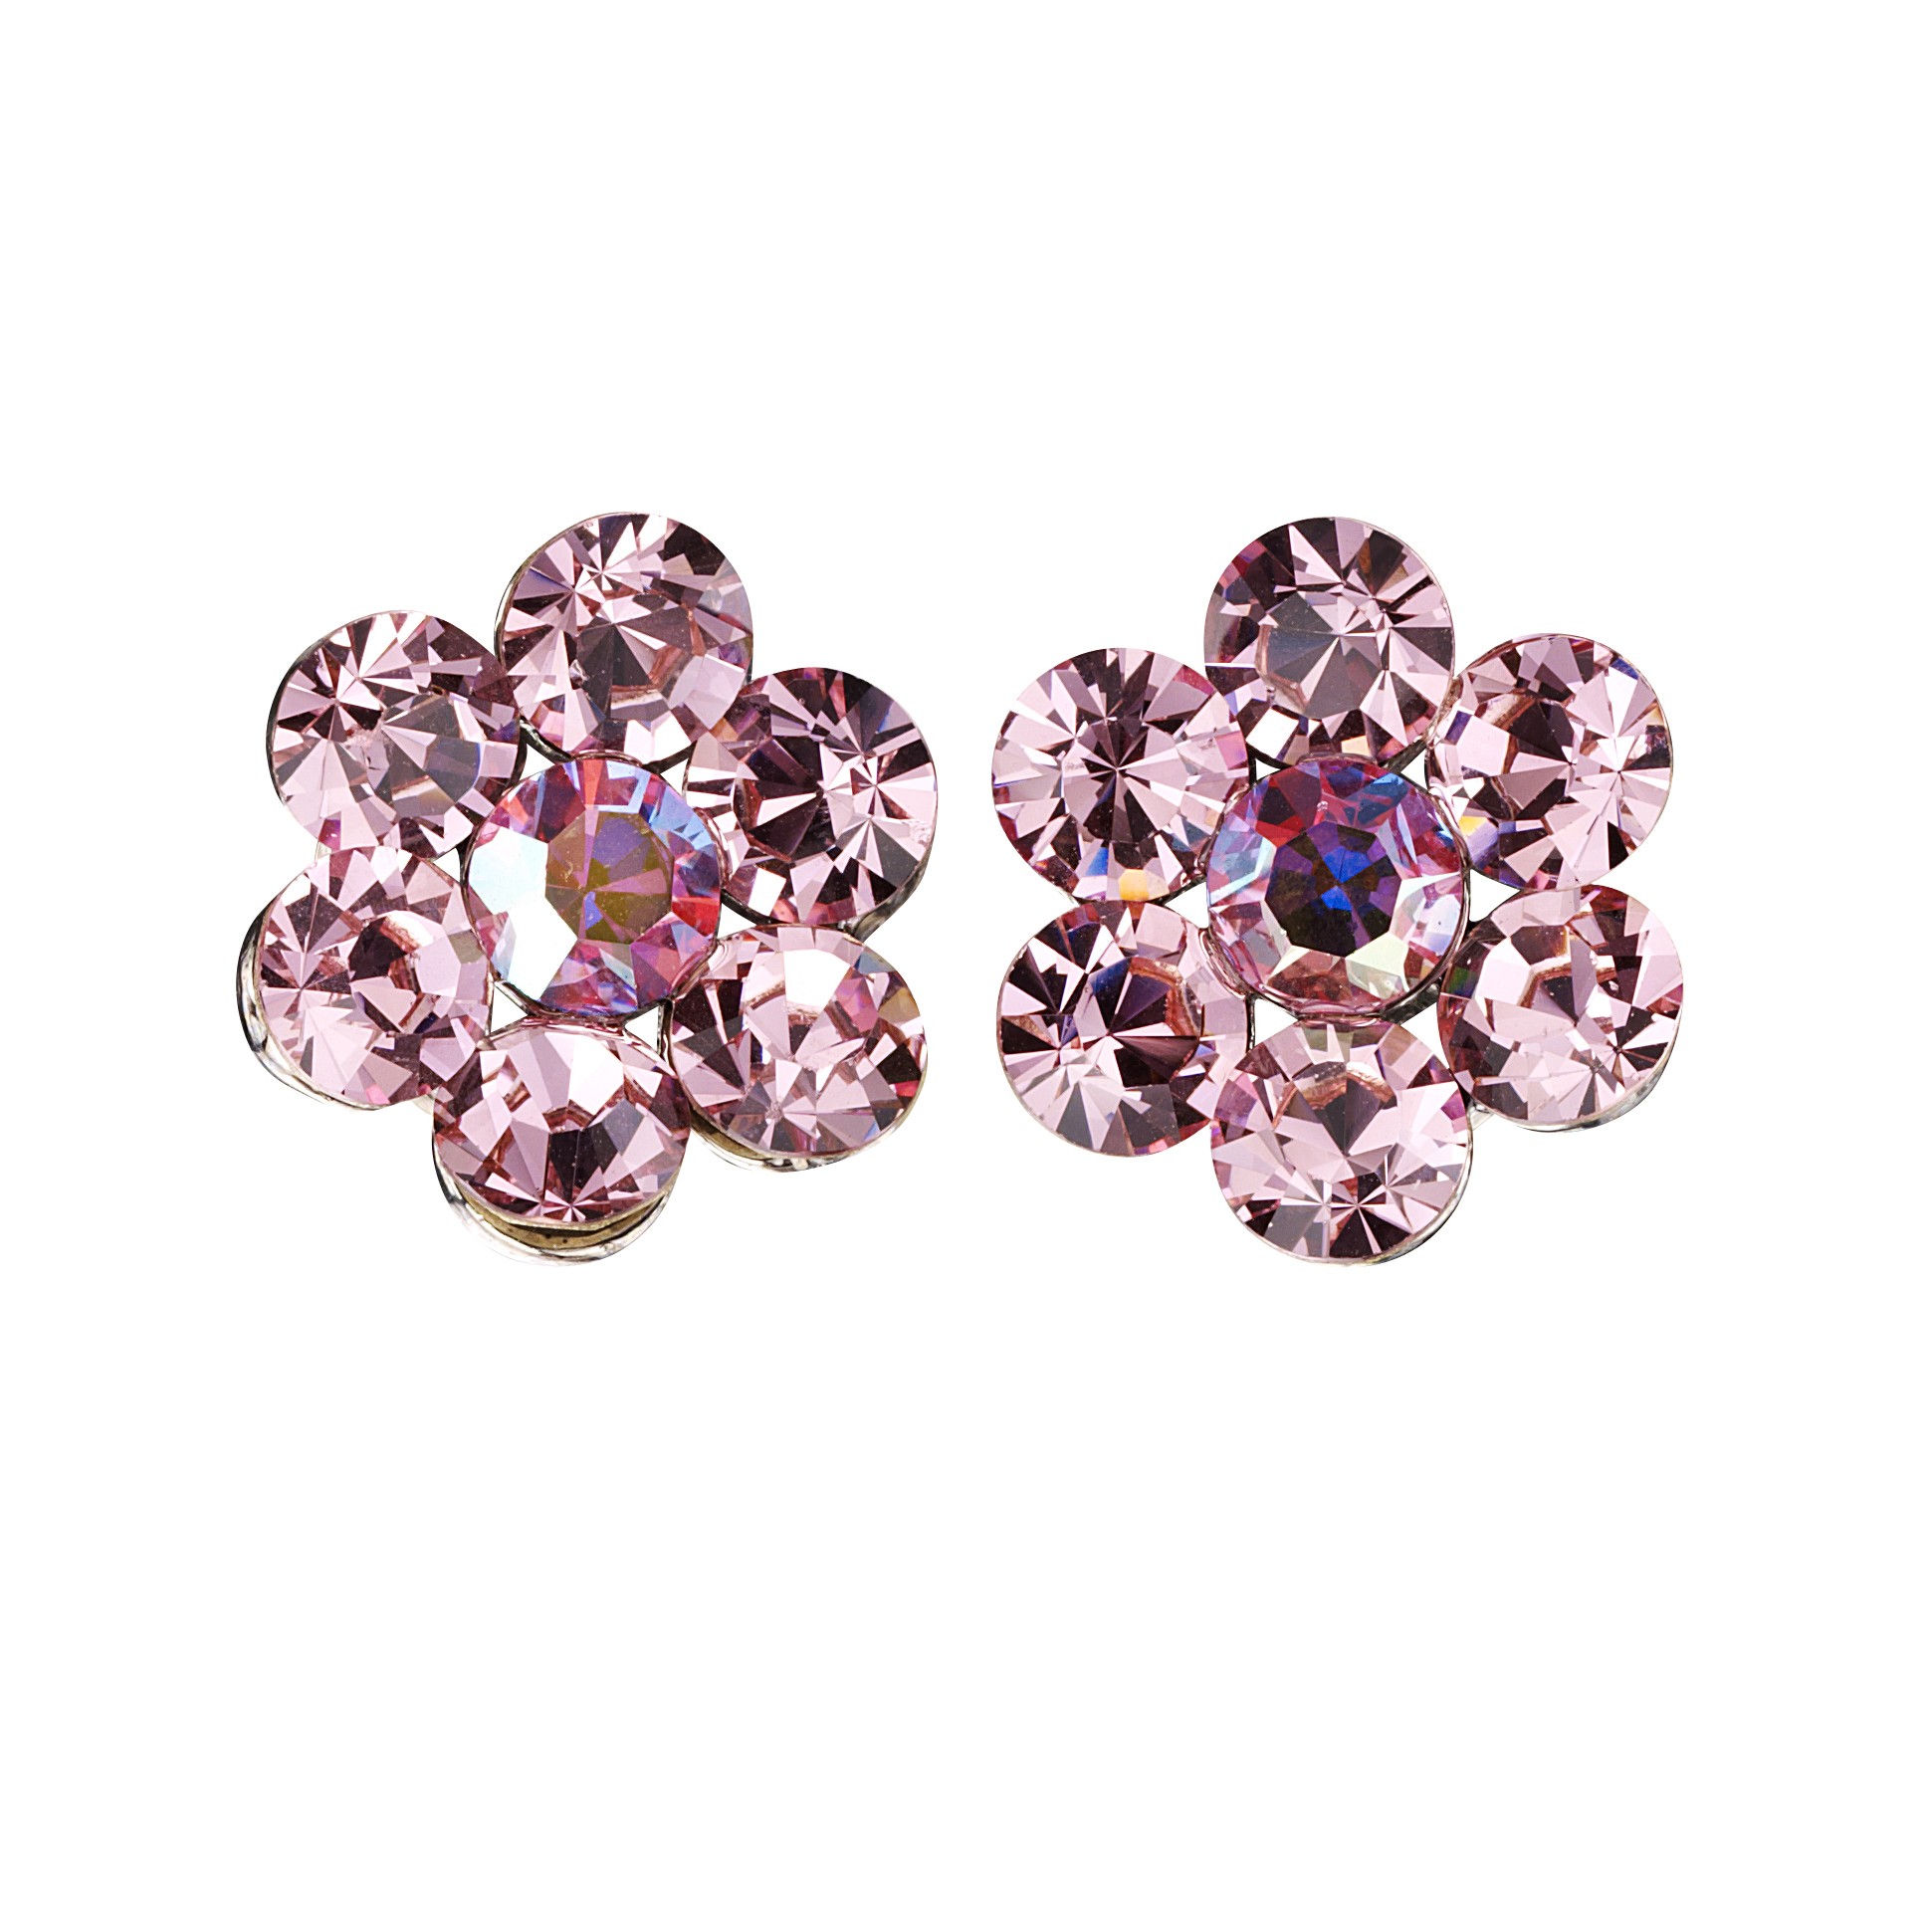 ley curva Convertir Swarovski Crystal Gemini London UK Jewellery's light Rose, Pink AB Swarovski  Crystal Flower Stud Earrings, 18mm Diameter , Rhodium Plated Silver Finish.  Necklaces, Earrings, Bracelets and Hairpieces